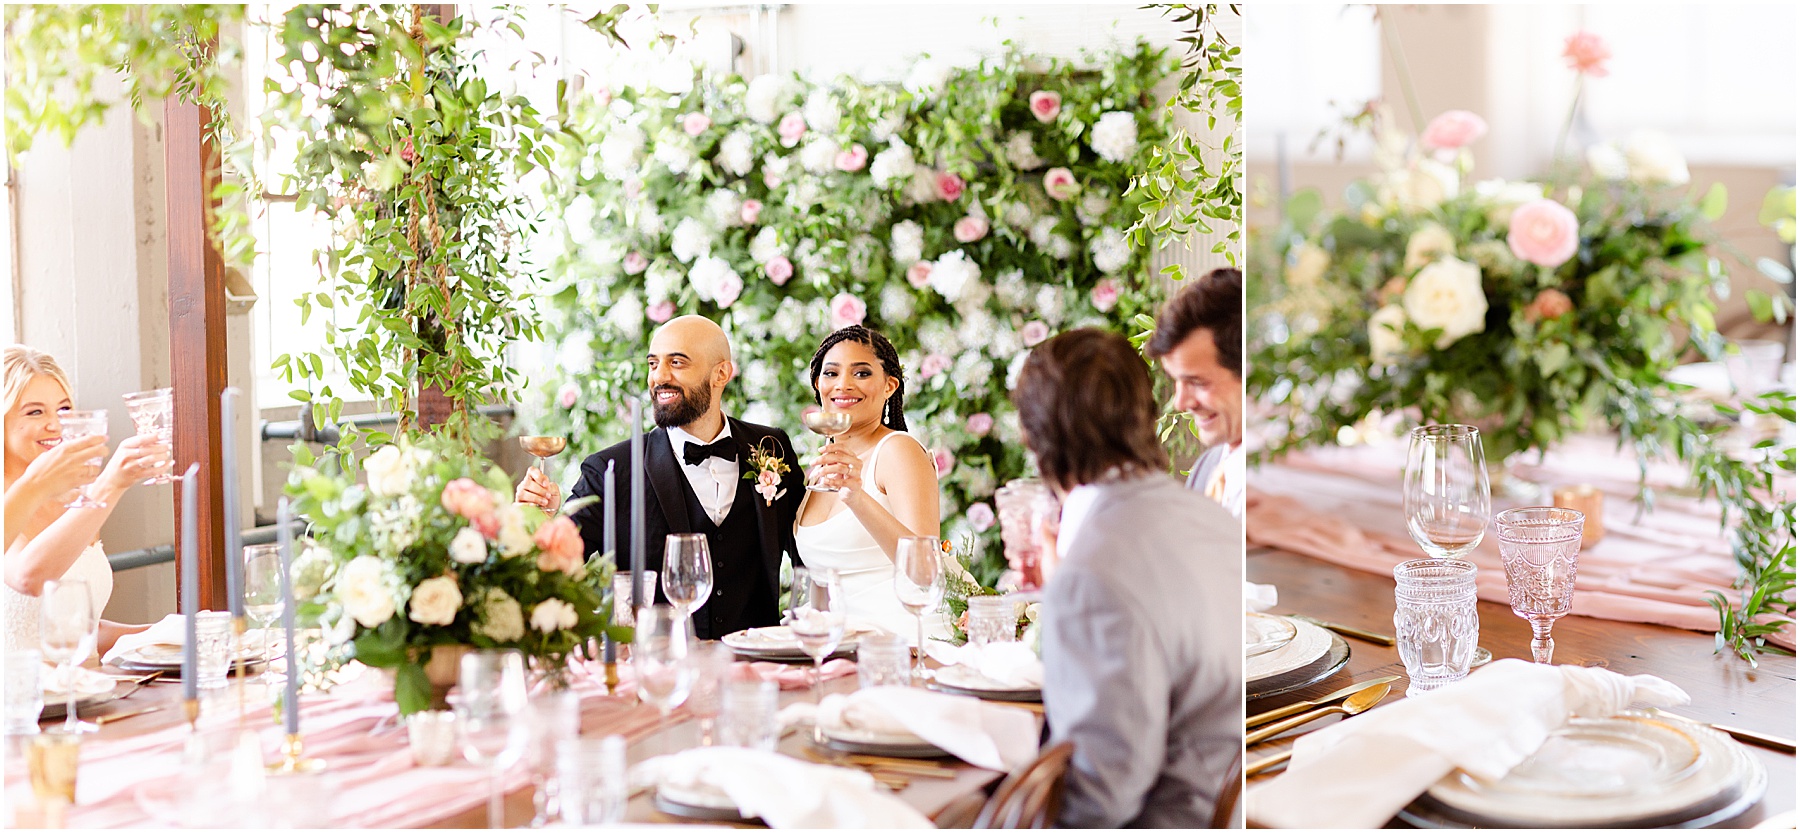 Reception Dinner Styled Photoshoot Wedding Conference Graceful Gathering